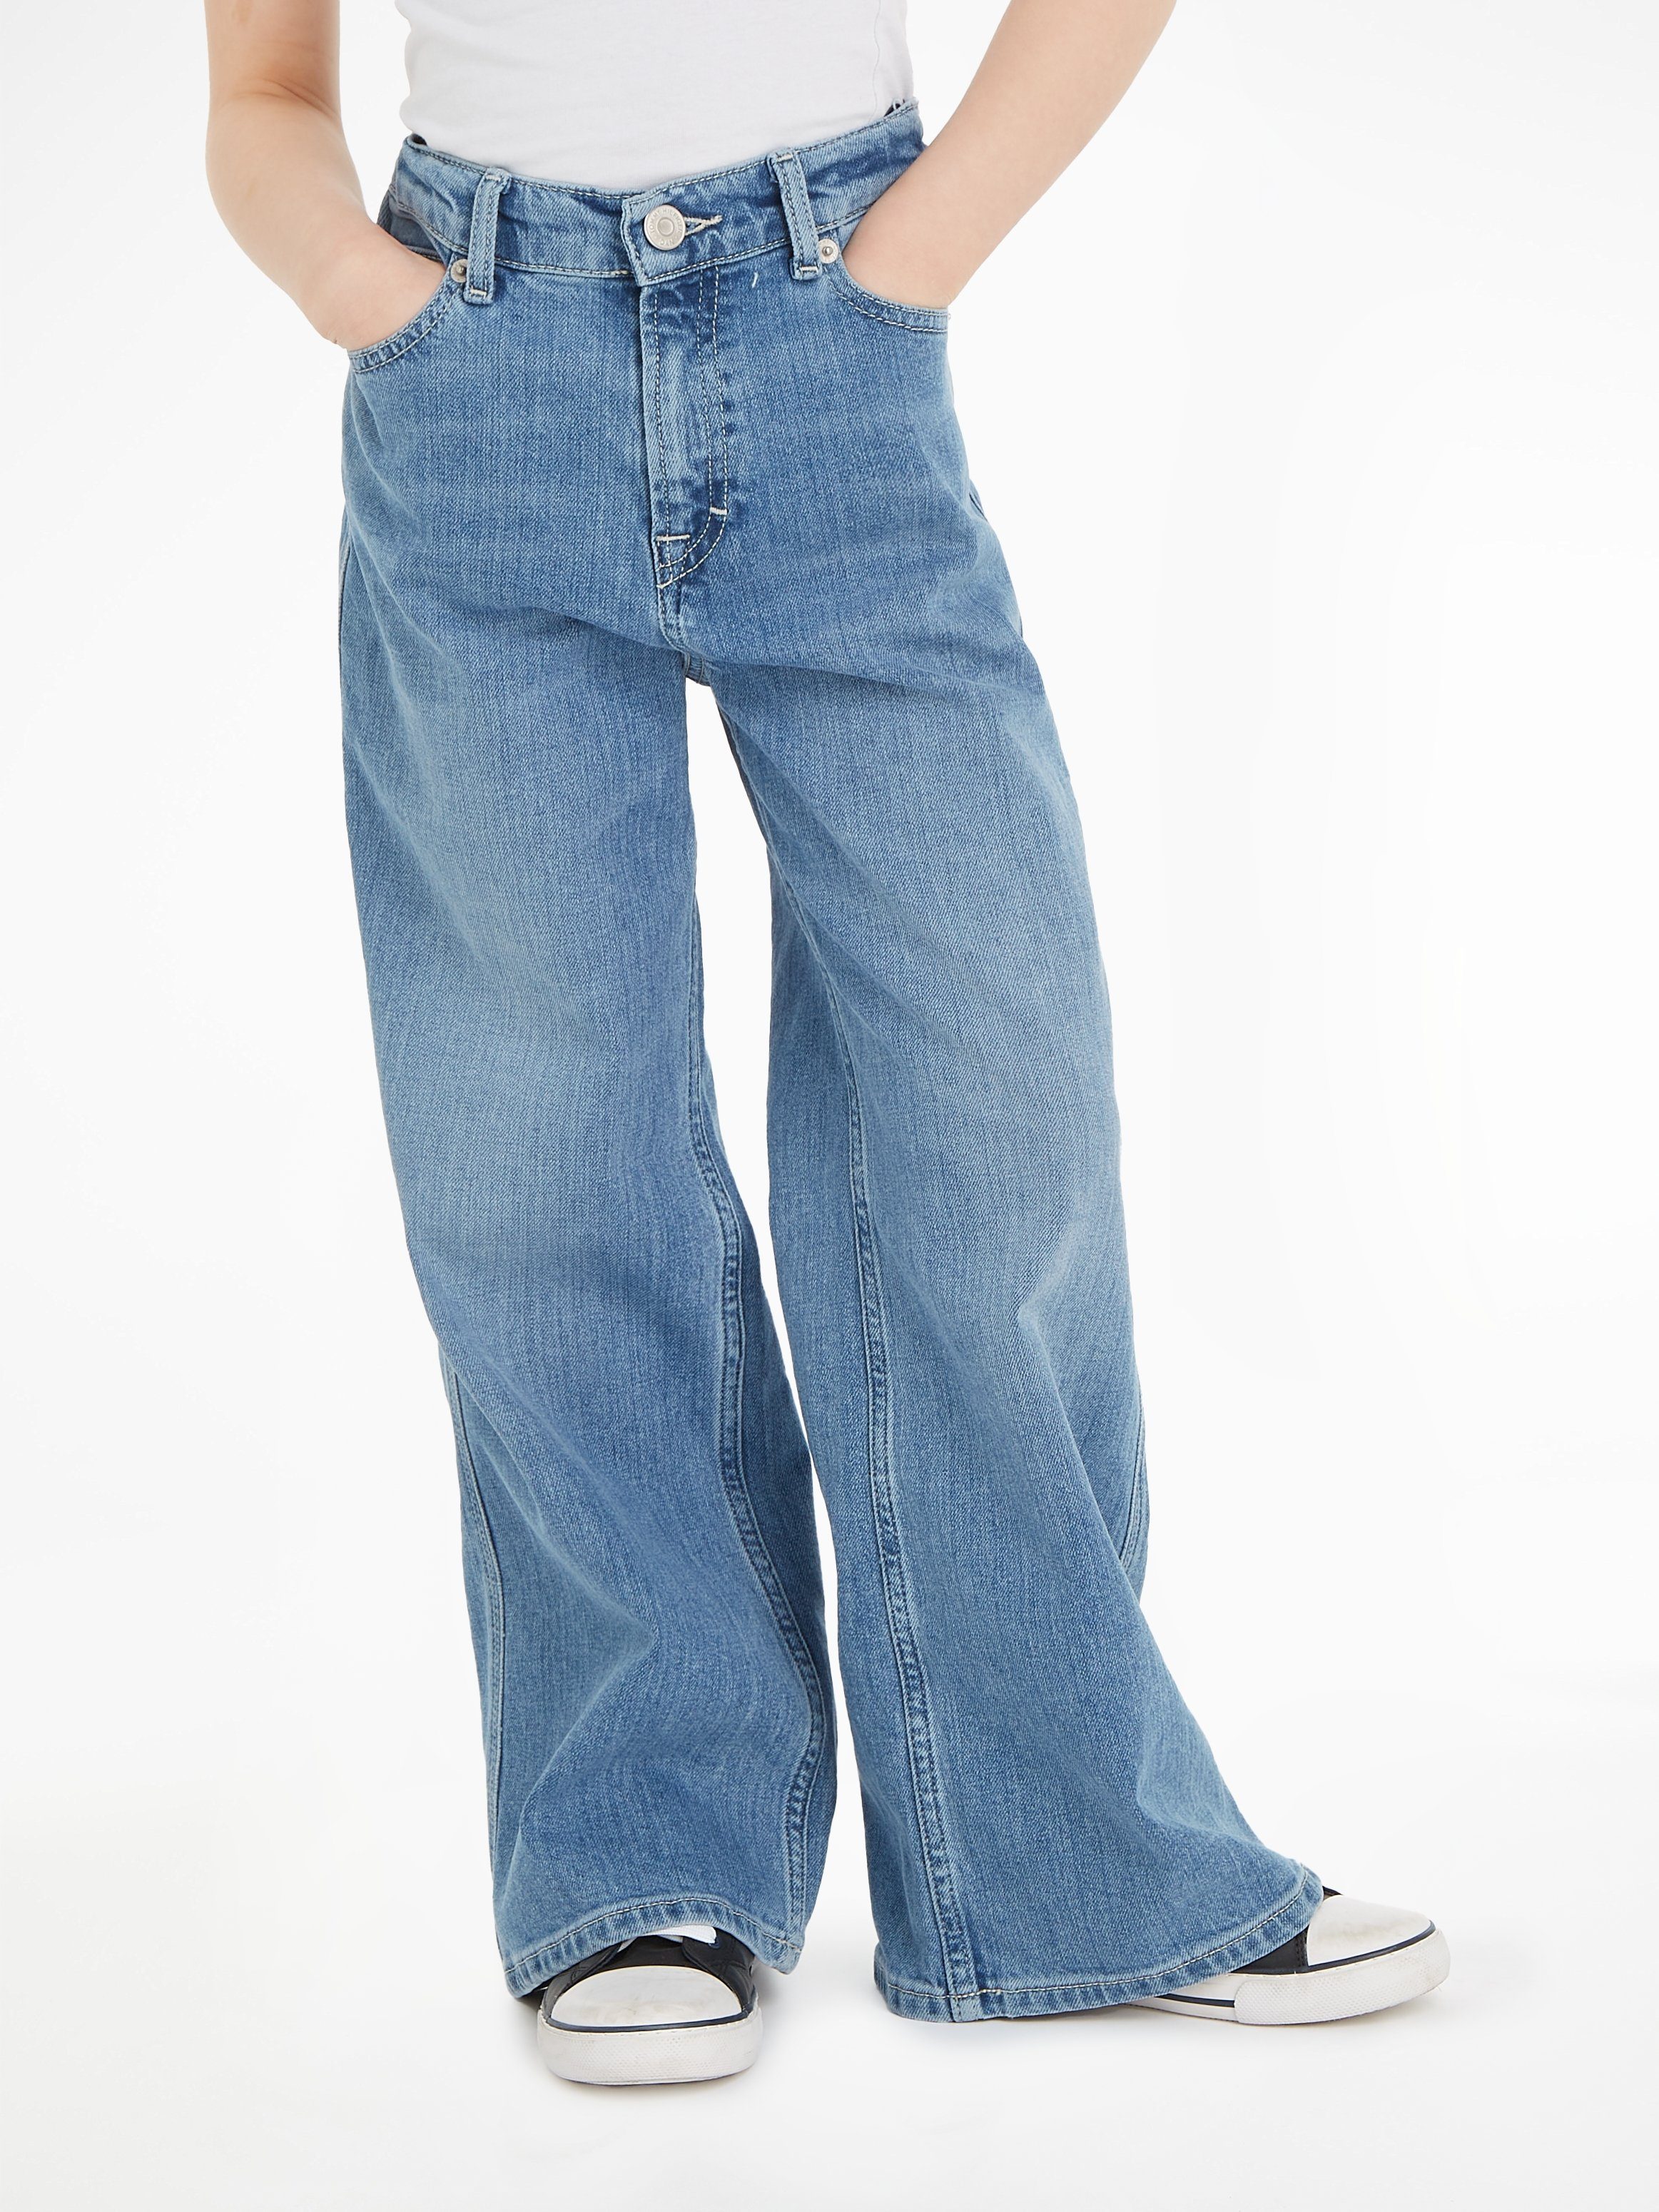 Jeans MABEL MID Weite Tommy WASH im 5-Pocket-Style Hilfiger